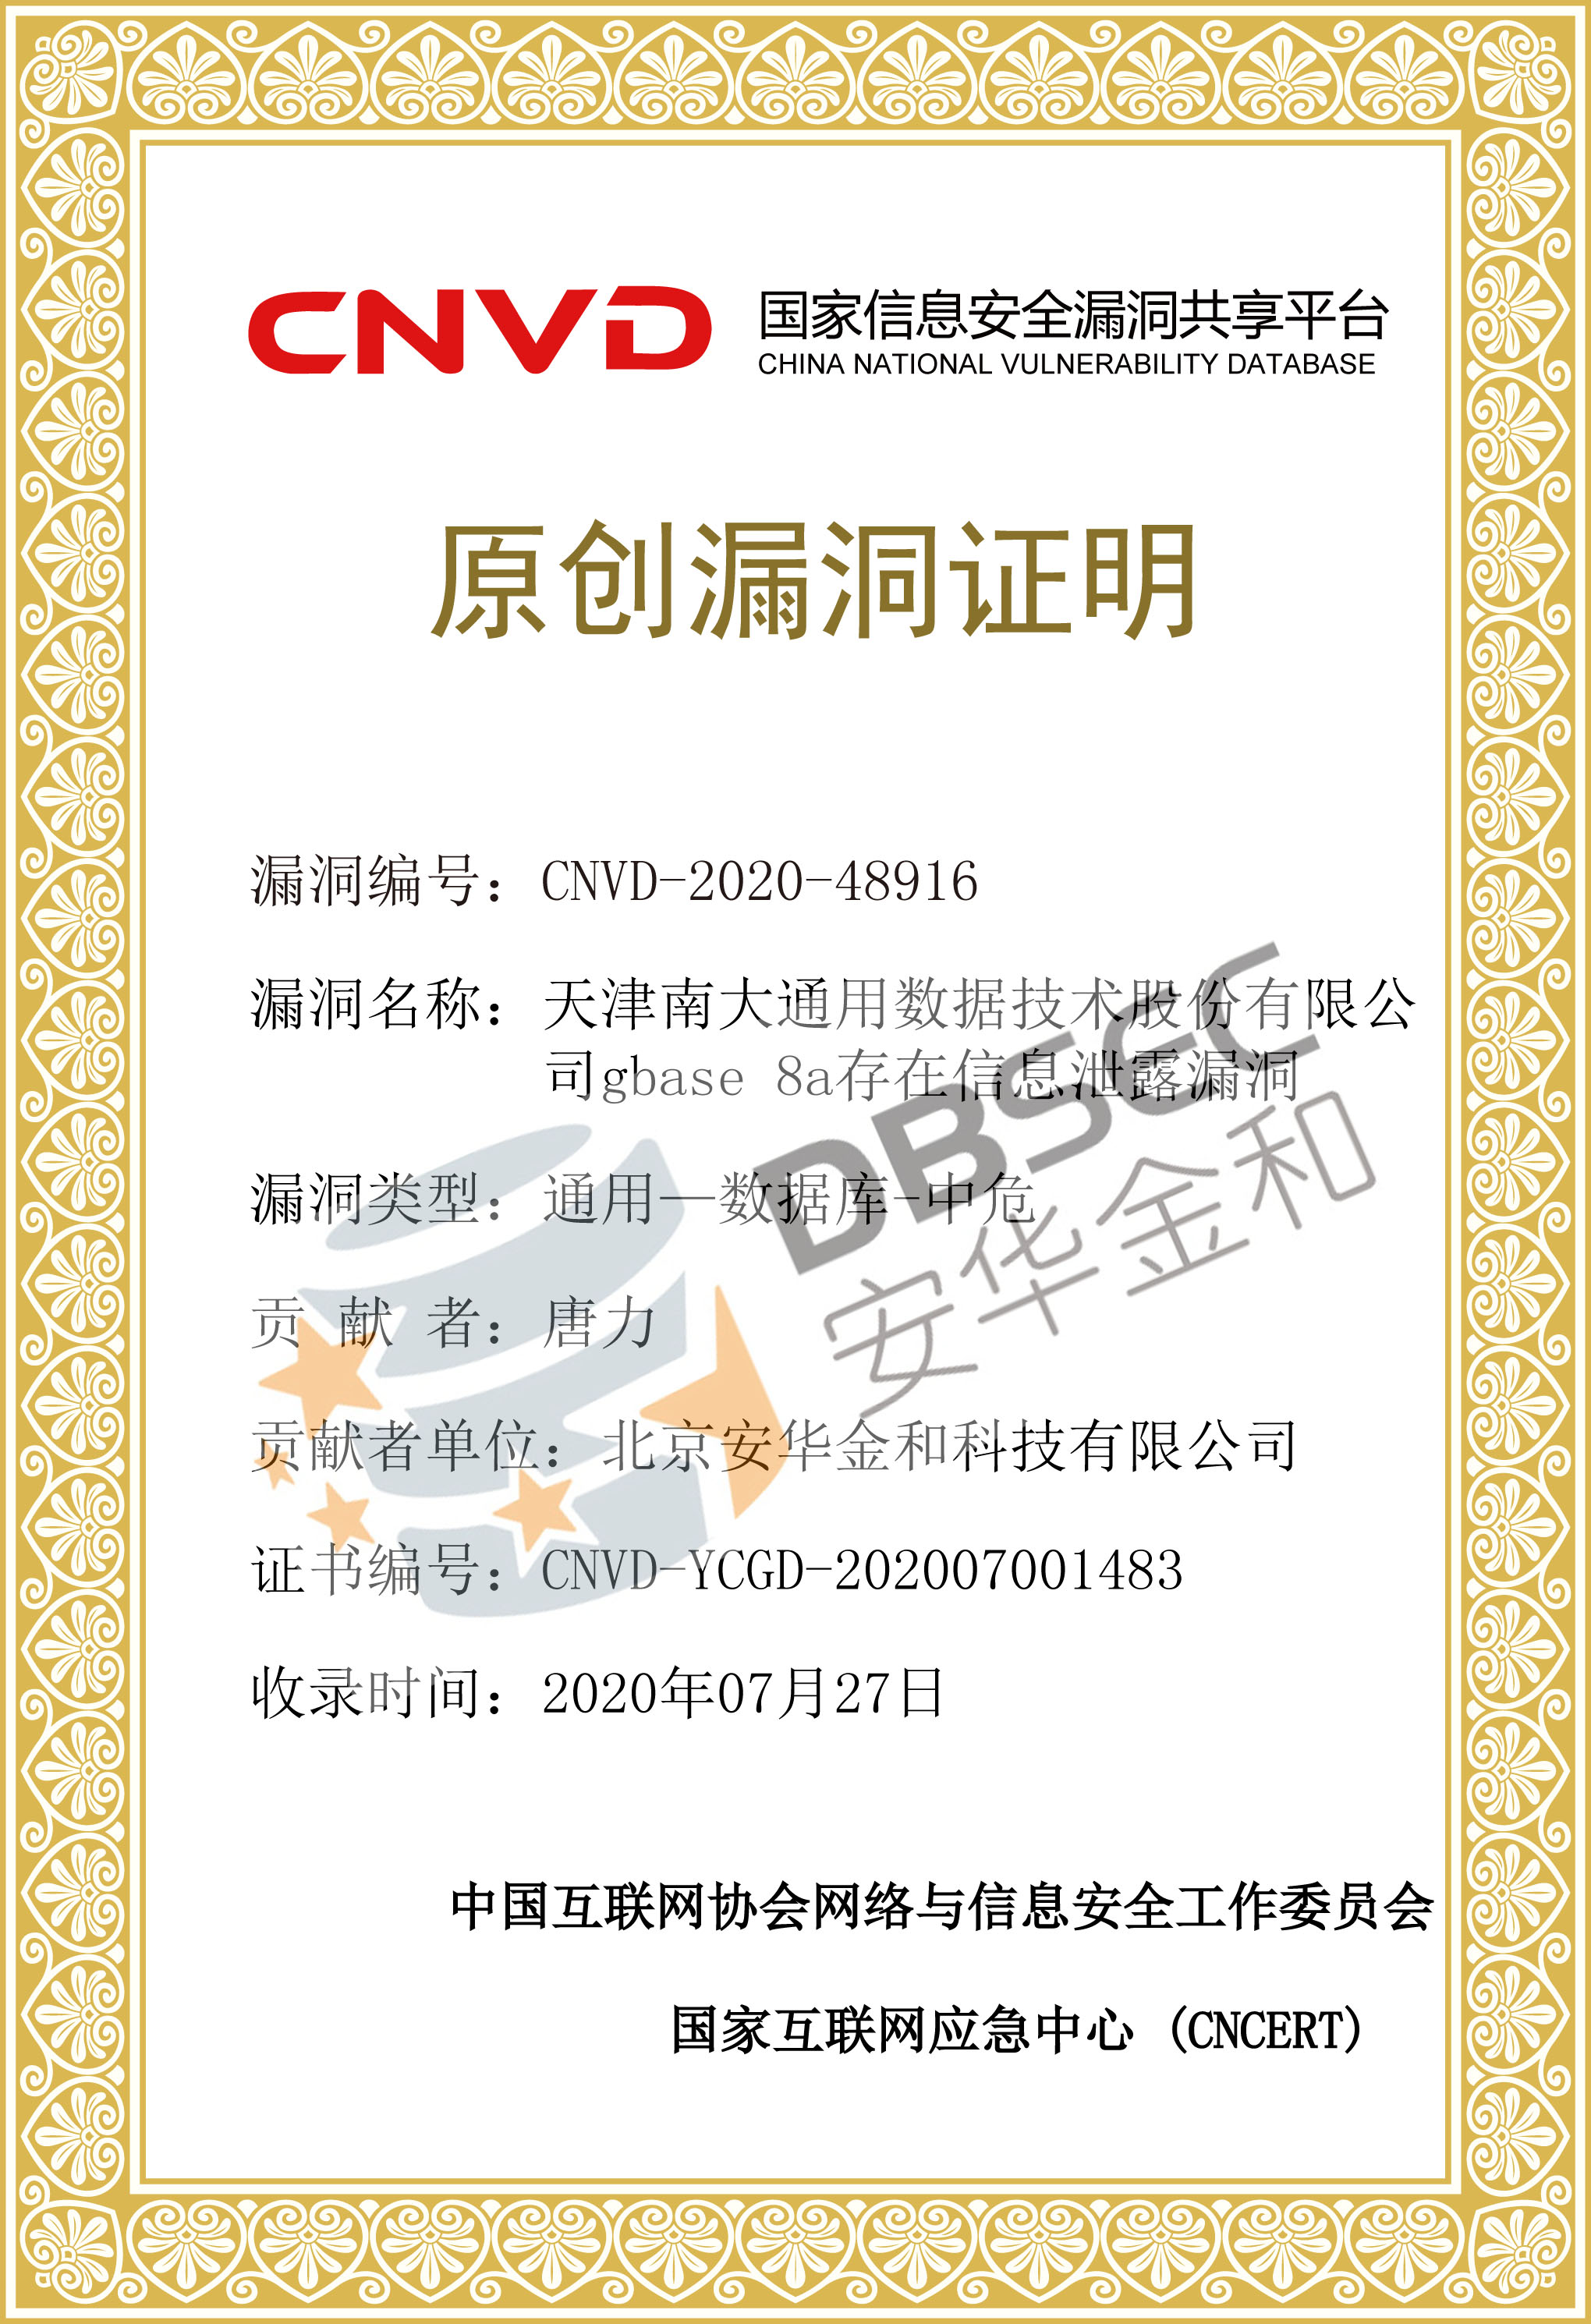 CNVD-YCGD-202007001483